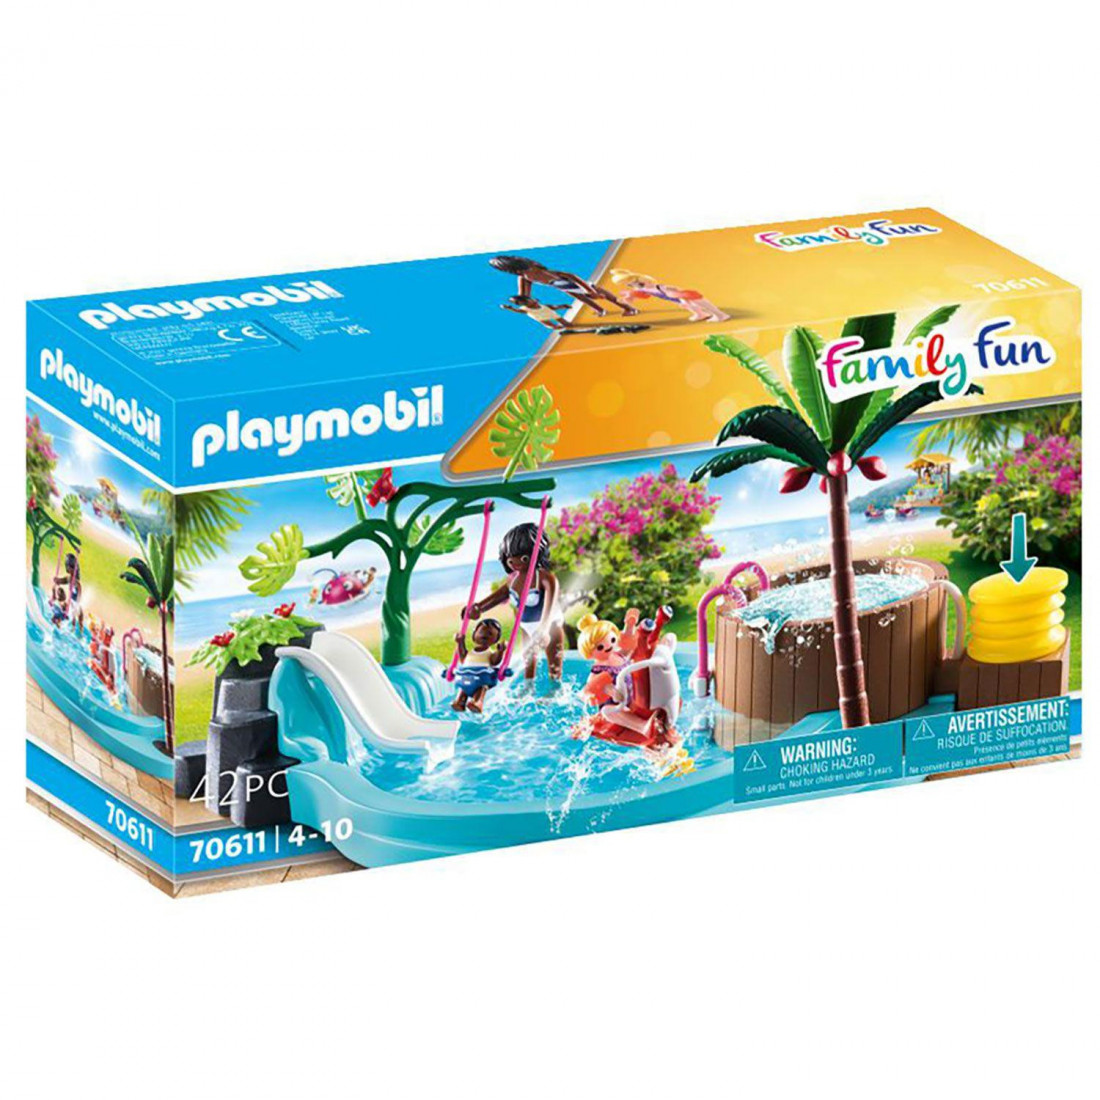 Family fun Παιδική πισίνα με υδρομασάζ 70611 Playmobil